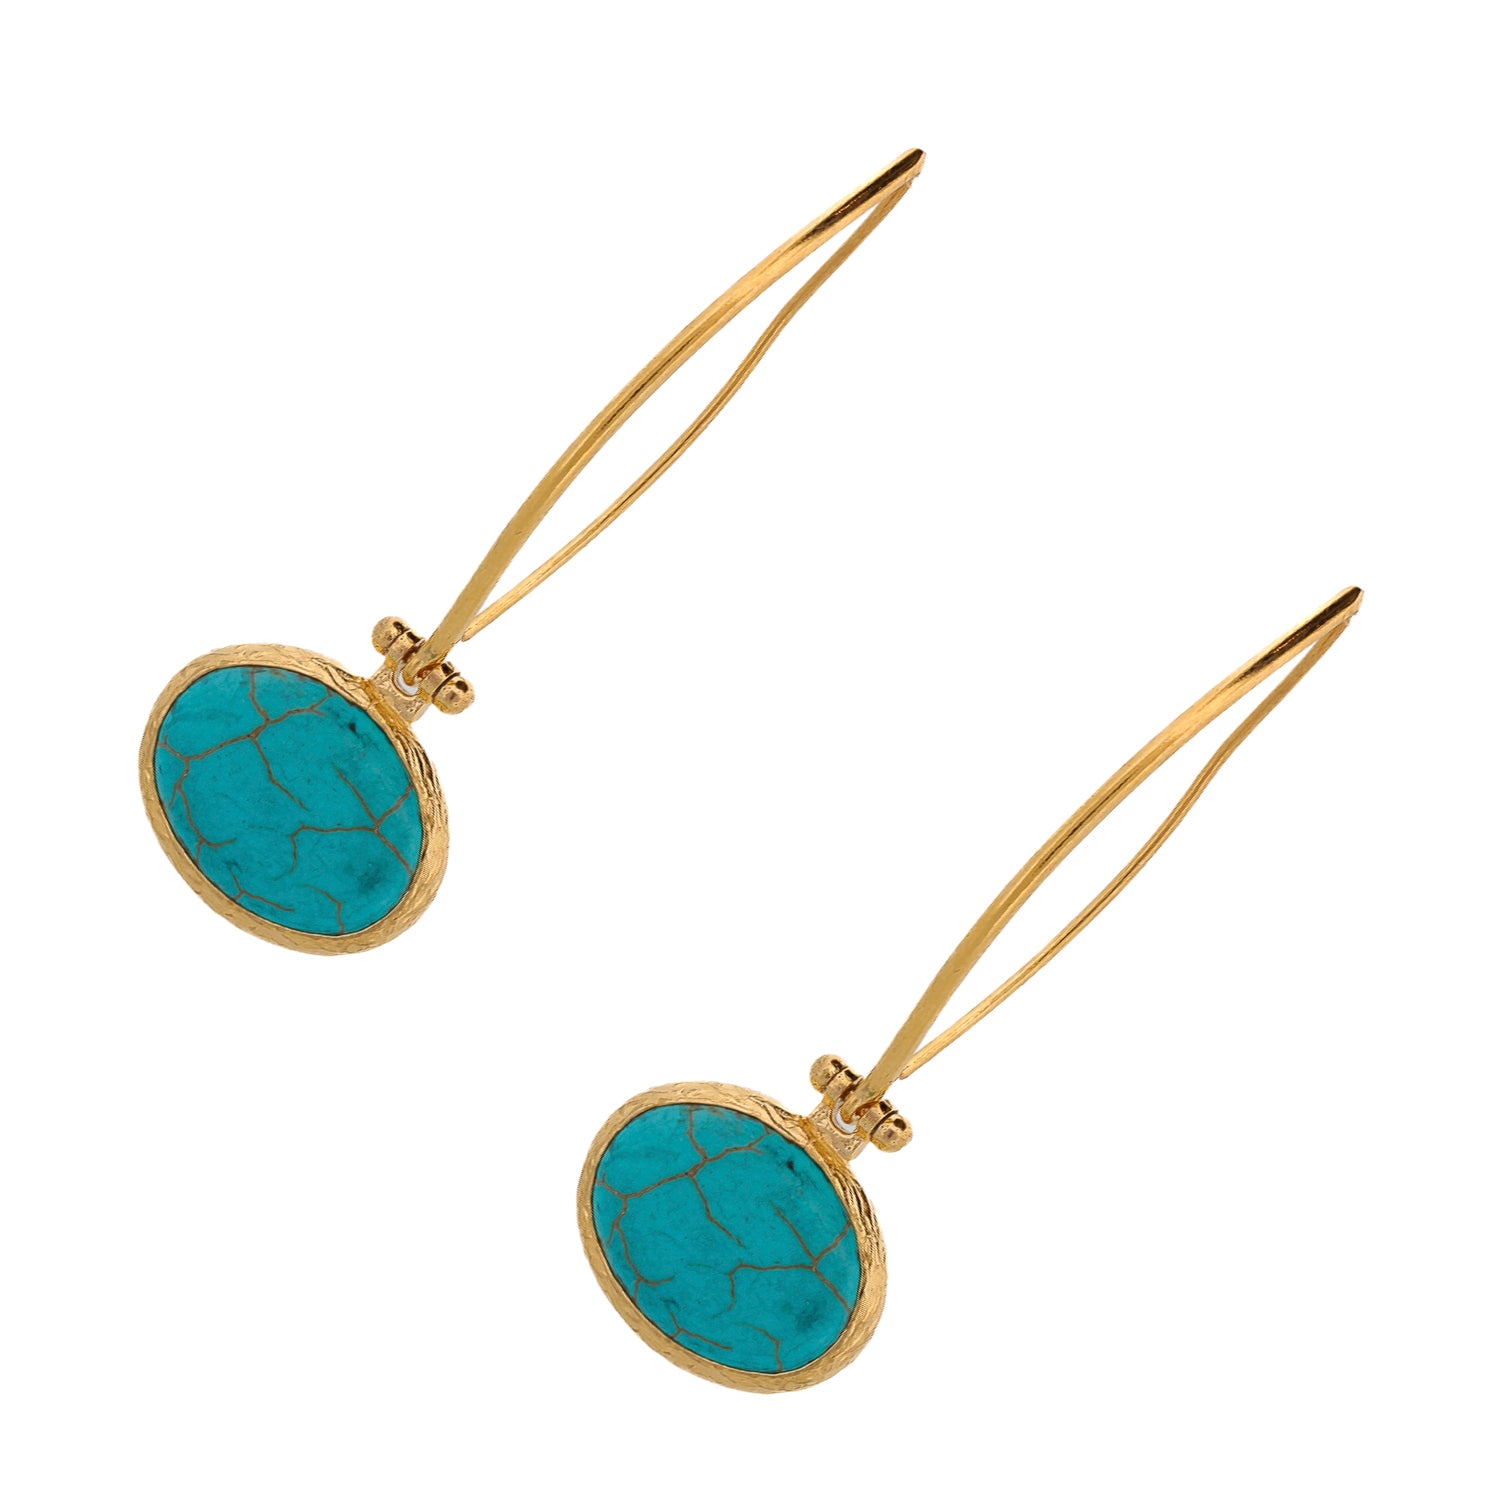 Stylish Turquoise Gemstone Earrings with Gold Dangle Design